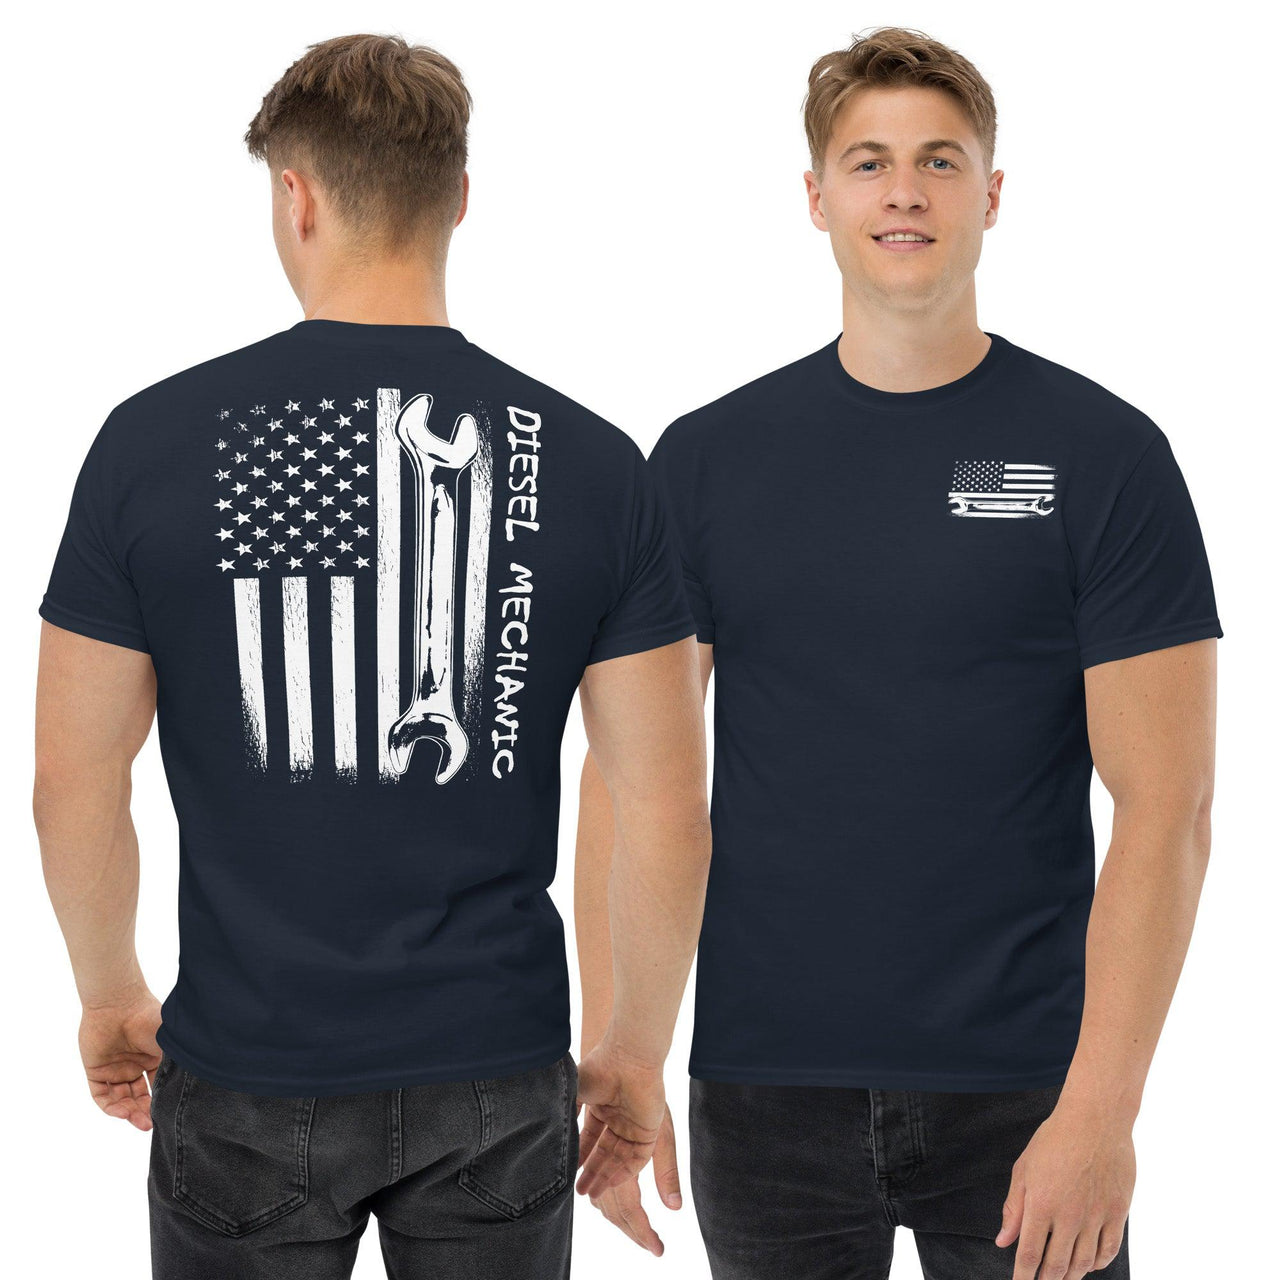 Squarebody Flag - Legends Never Die American Flag – Aggressive Thread Truck  Apparel